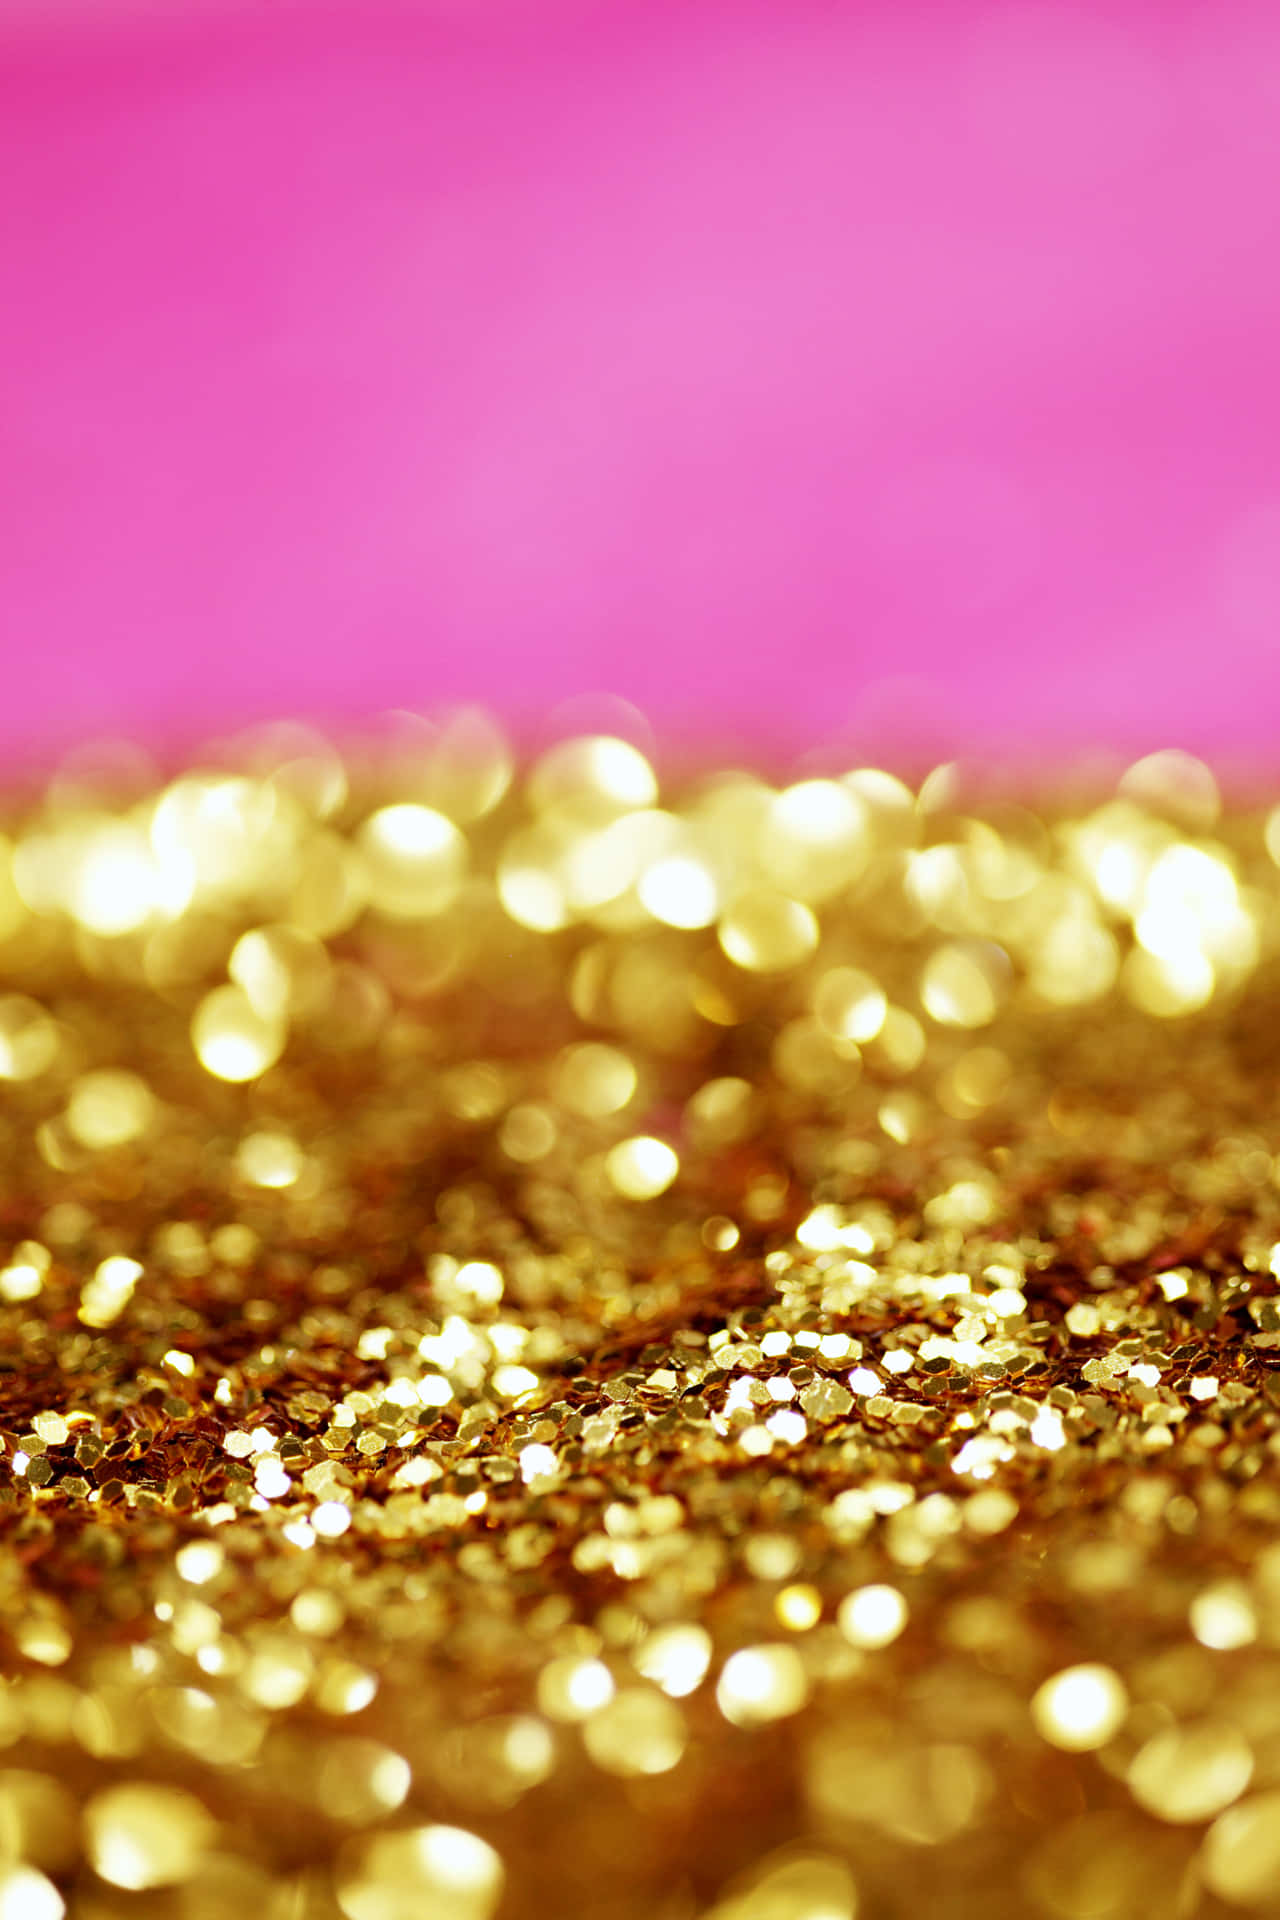 A Gold Glittery Background